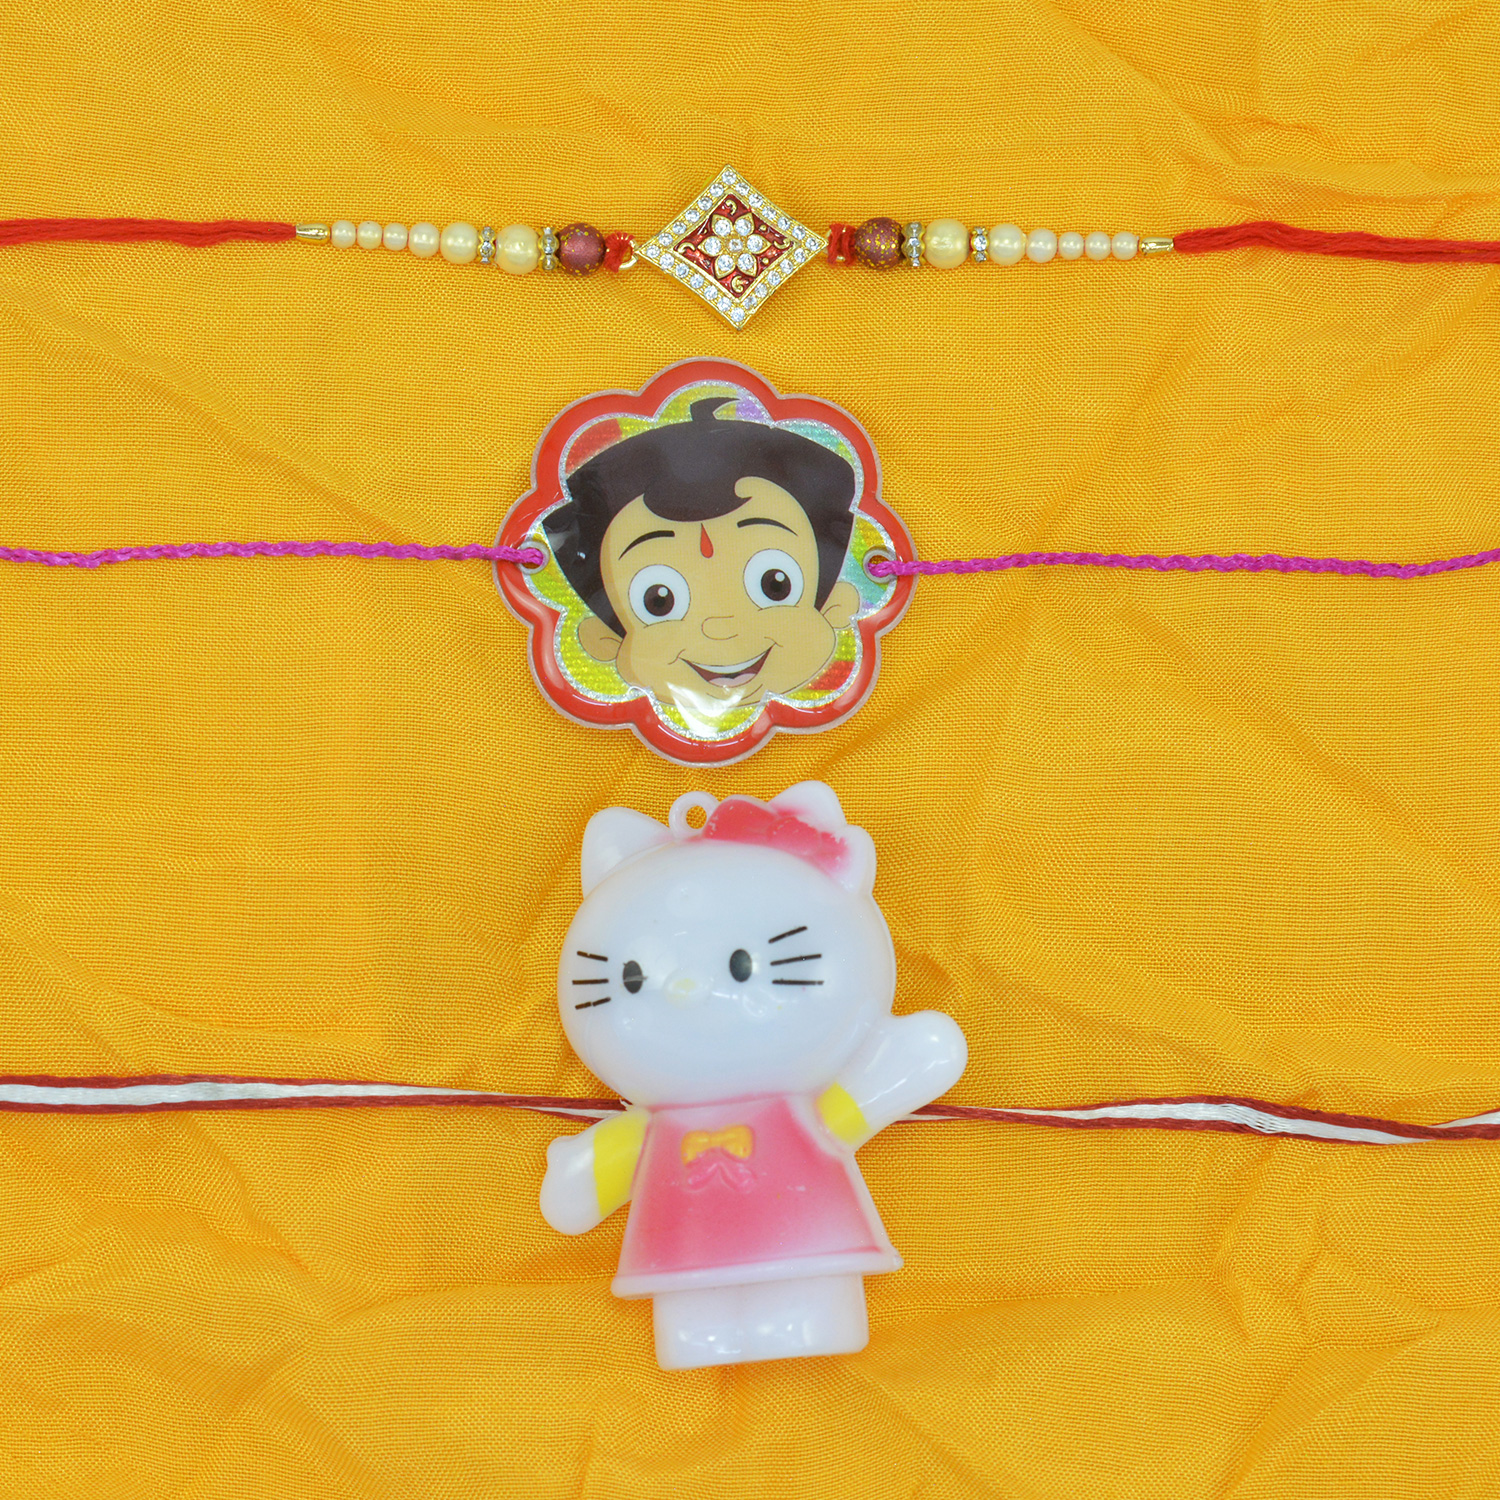 Unique Design Jewel Brother Rakhis with Chota Bheem and Doll 2 Kids Rakhi